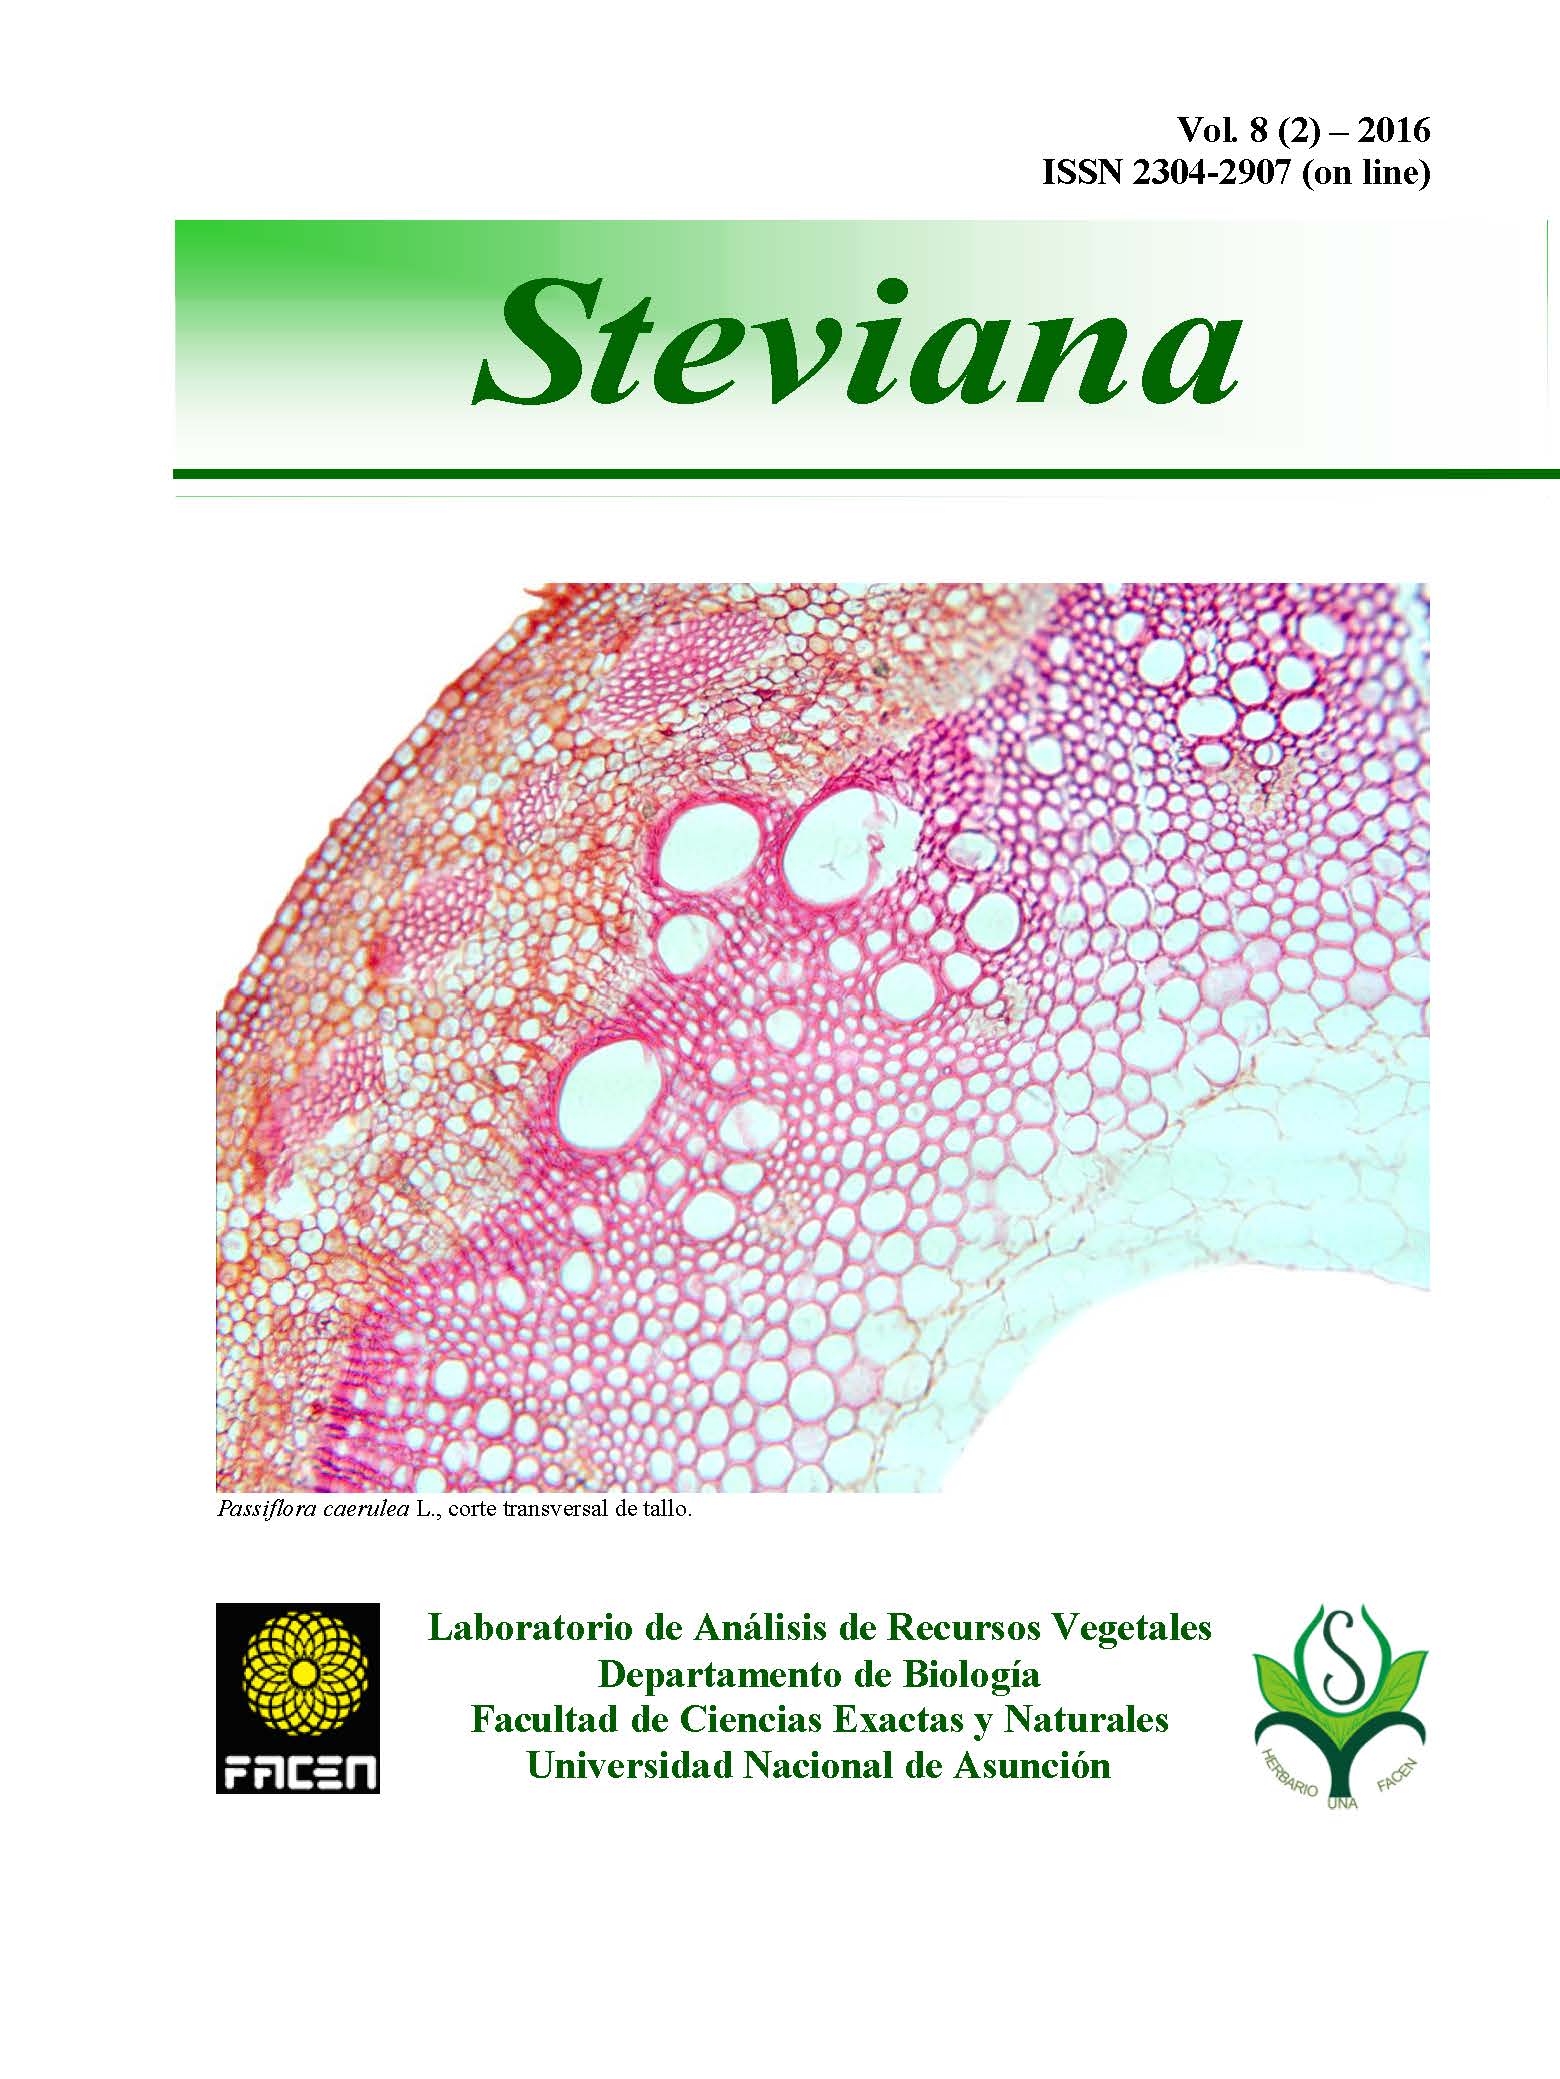 					Ver Vol. 8 Núm. 2 (2016): Steviana
				